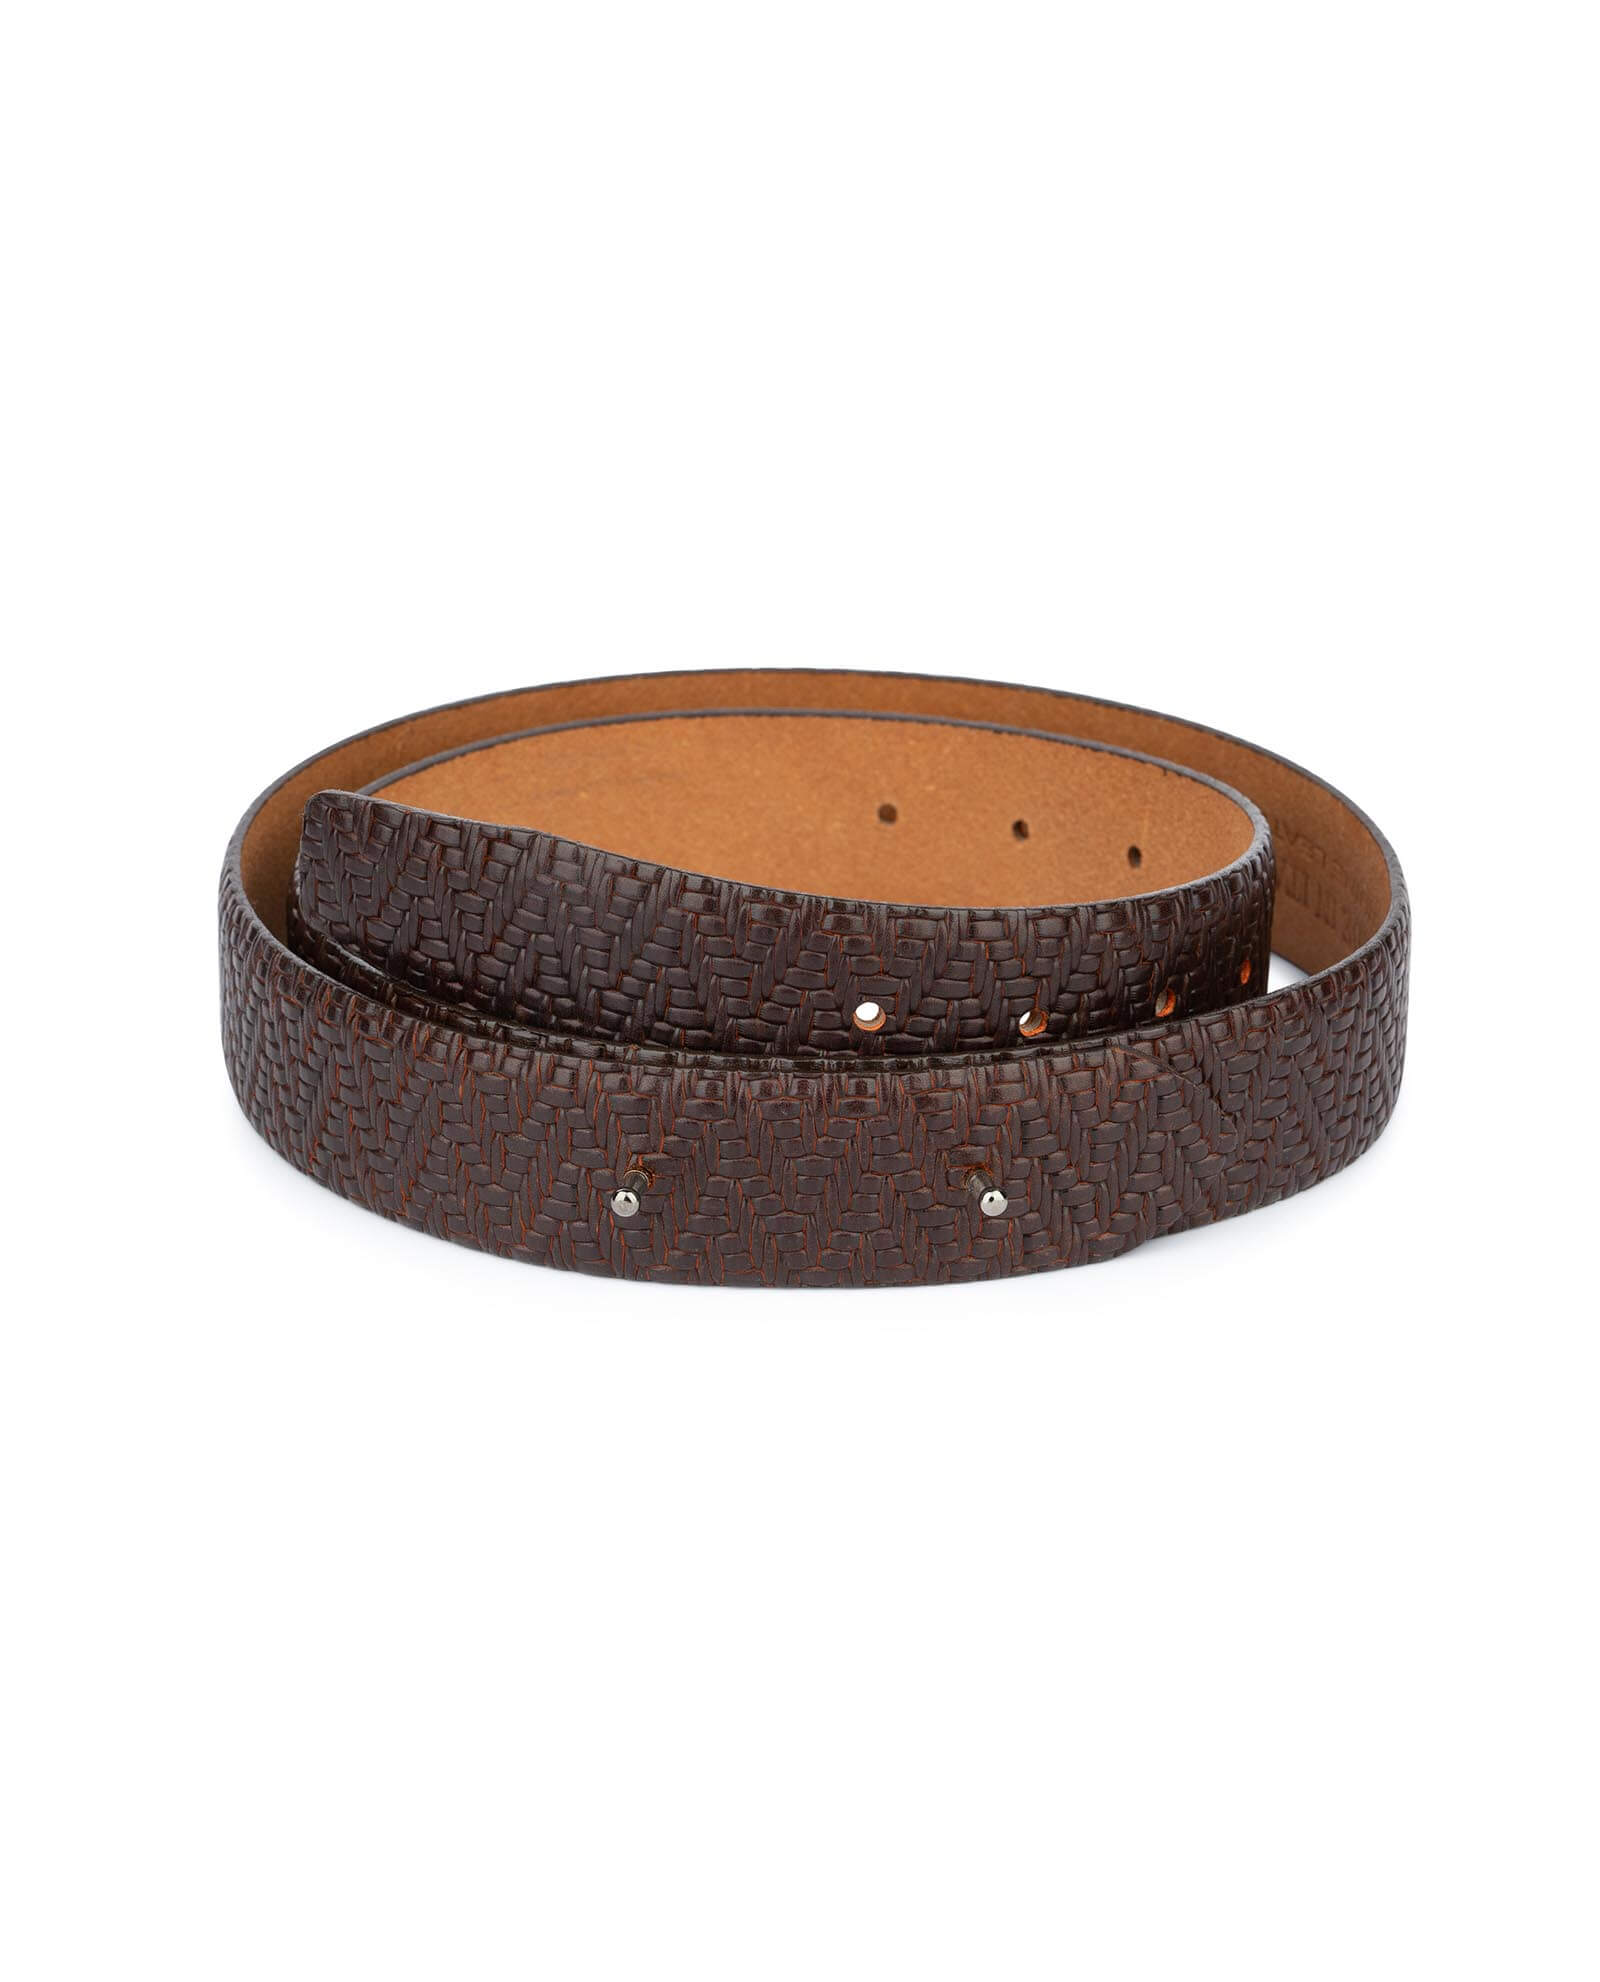 Buy Embossed Brown Mens Belt Without Buckle | LeatherBeltsOnline.com